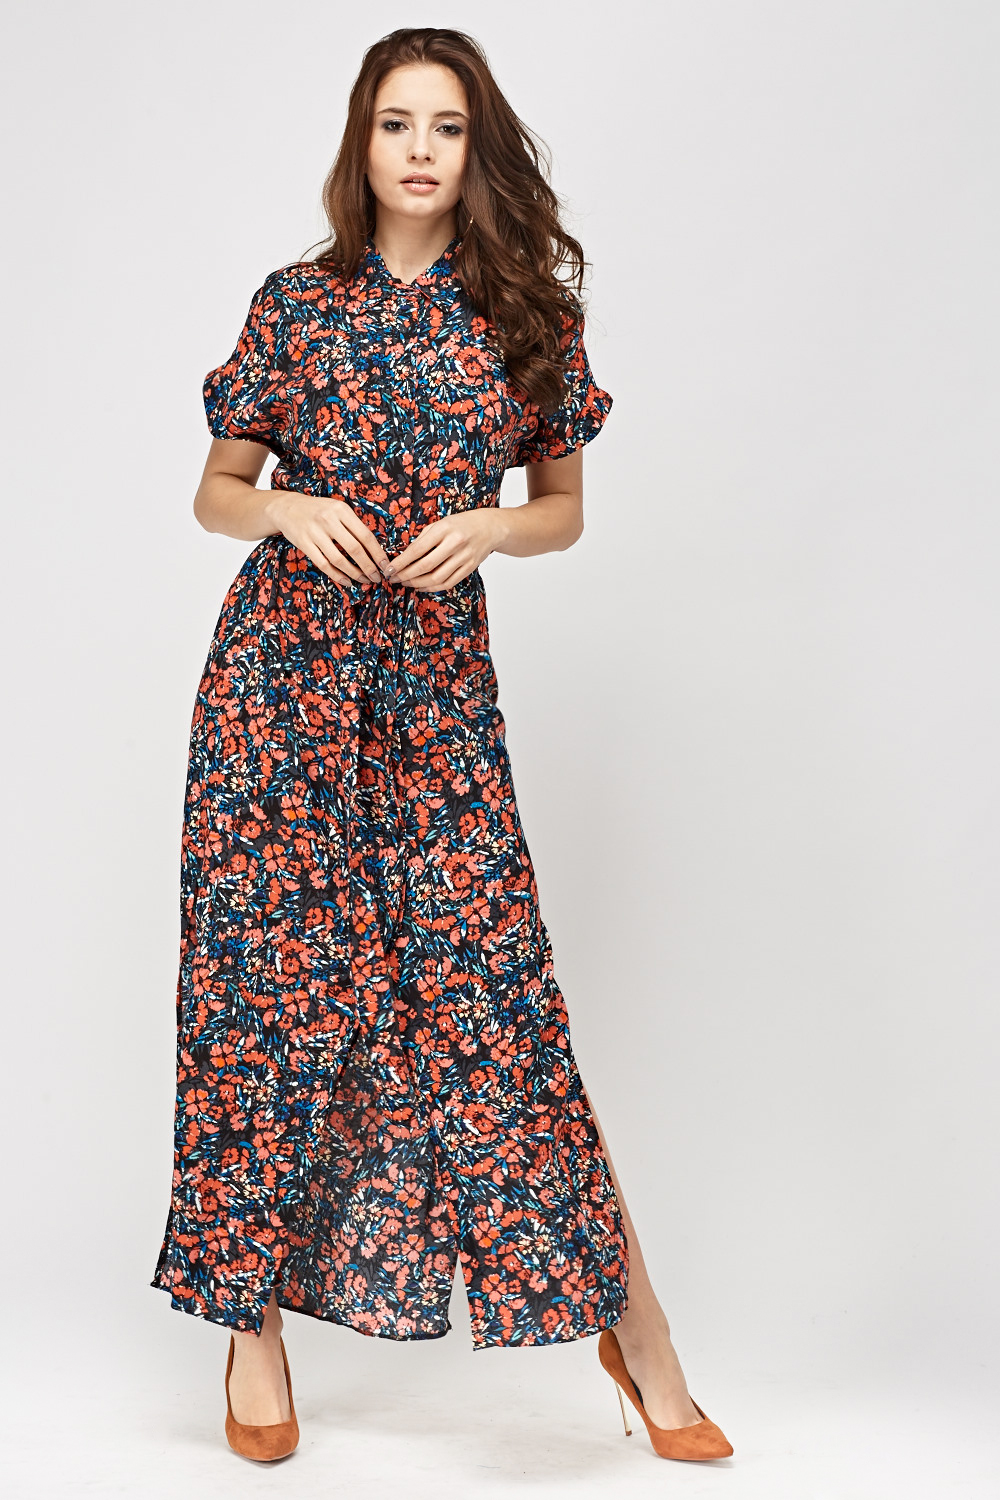 Button Up Floral Maxi Dress - Just $7